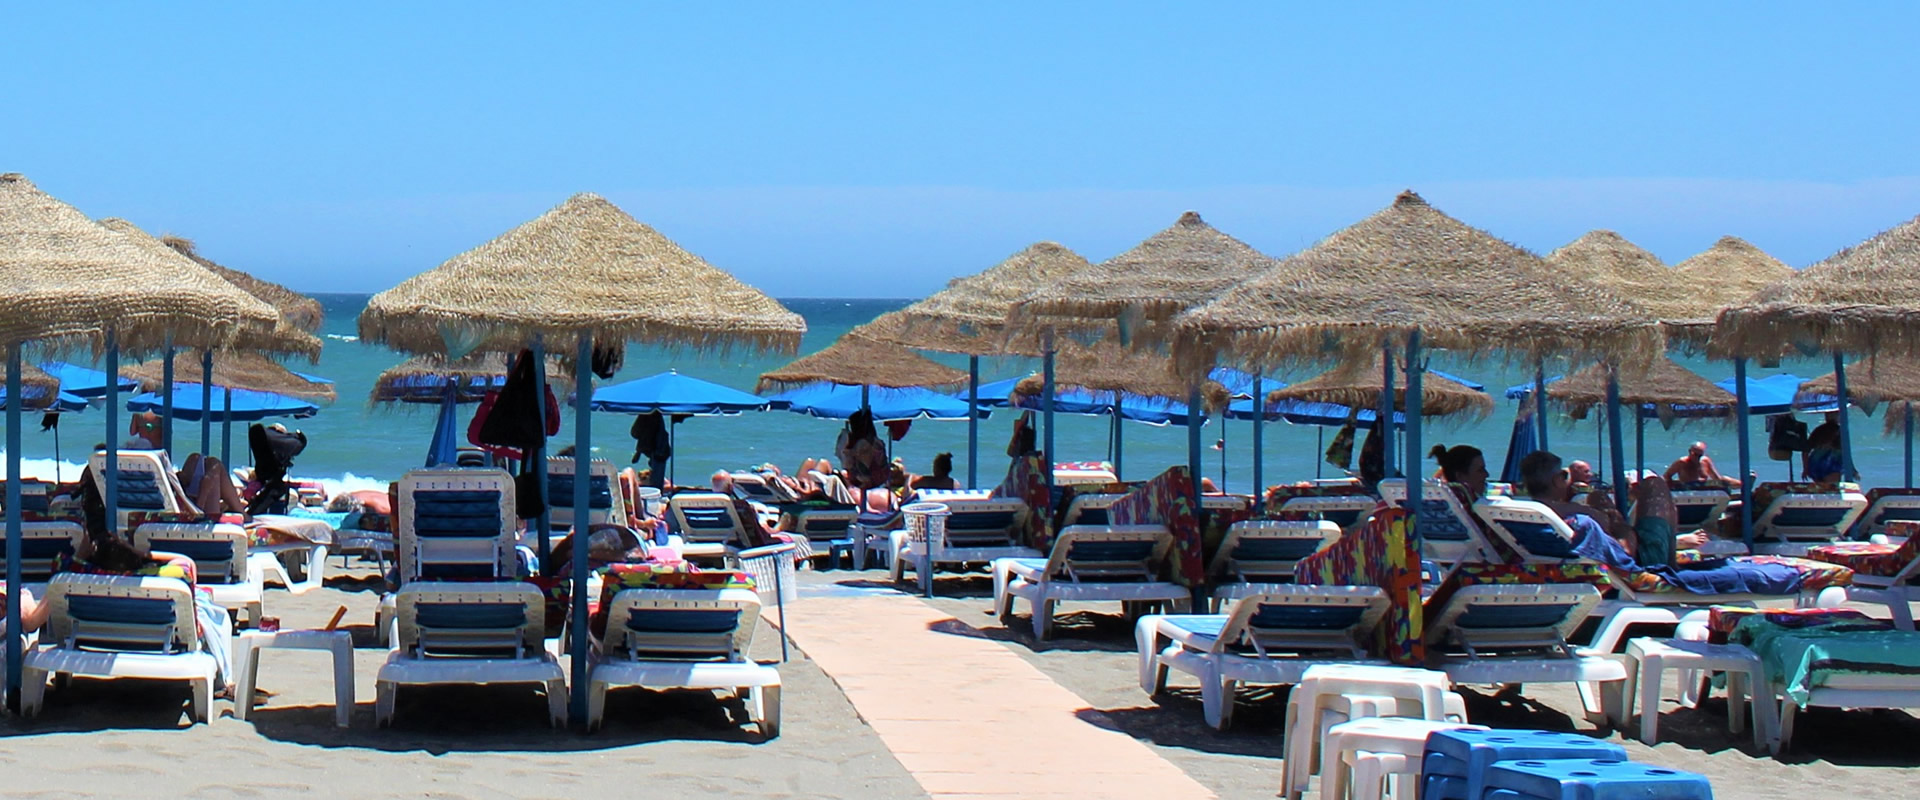 Hotel Cabello Hamacas Playa